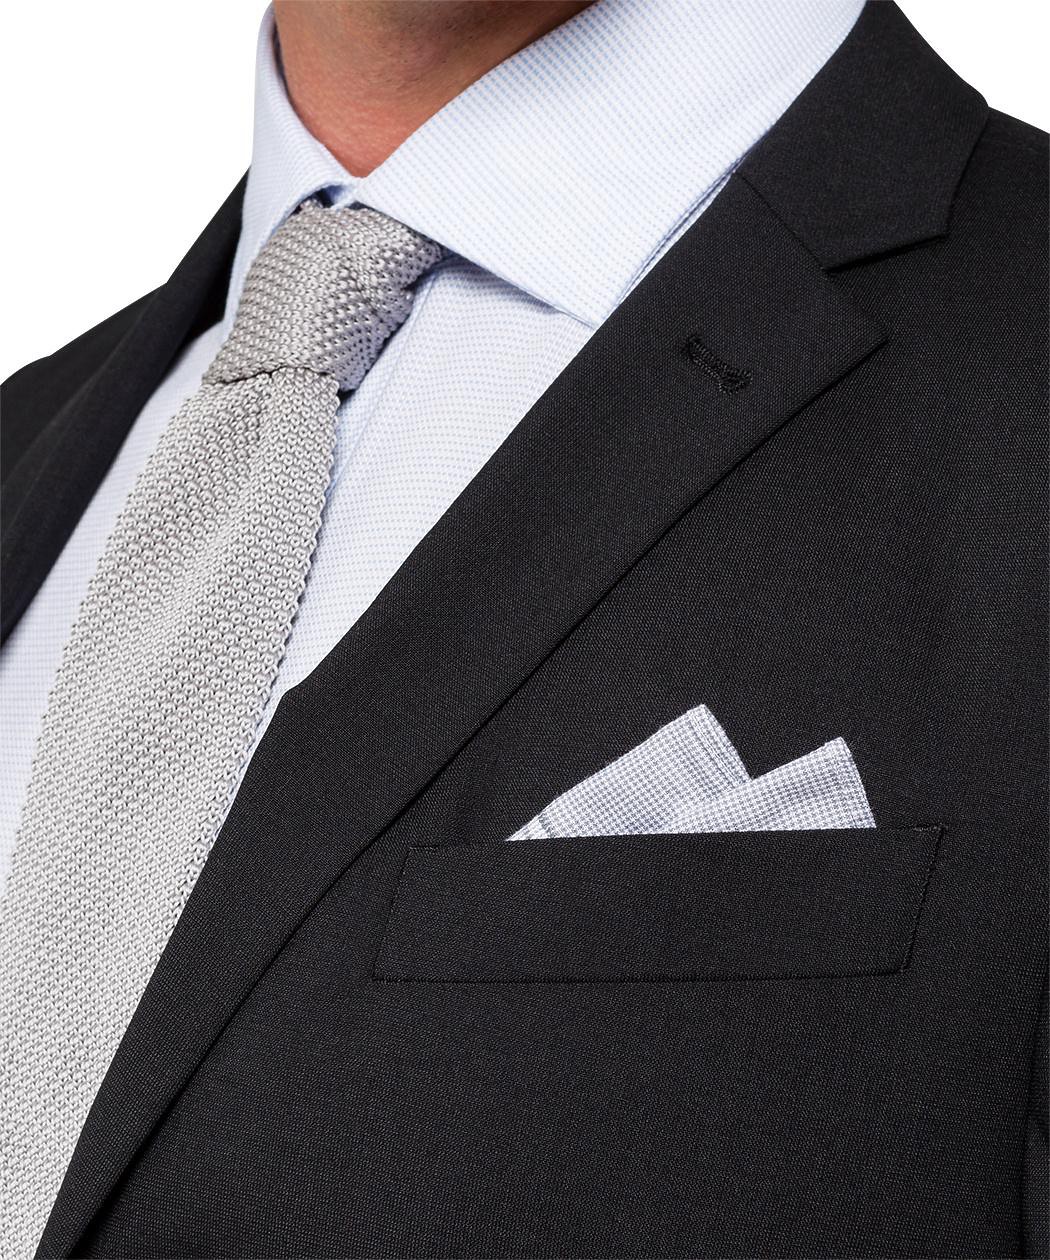 Mens Suits | Van Heusen Suits | Classic Suit | Save up to 25%